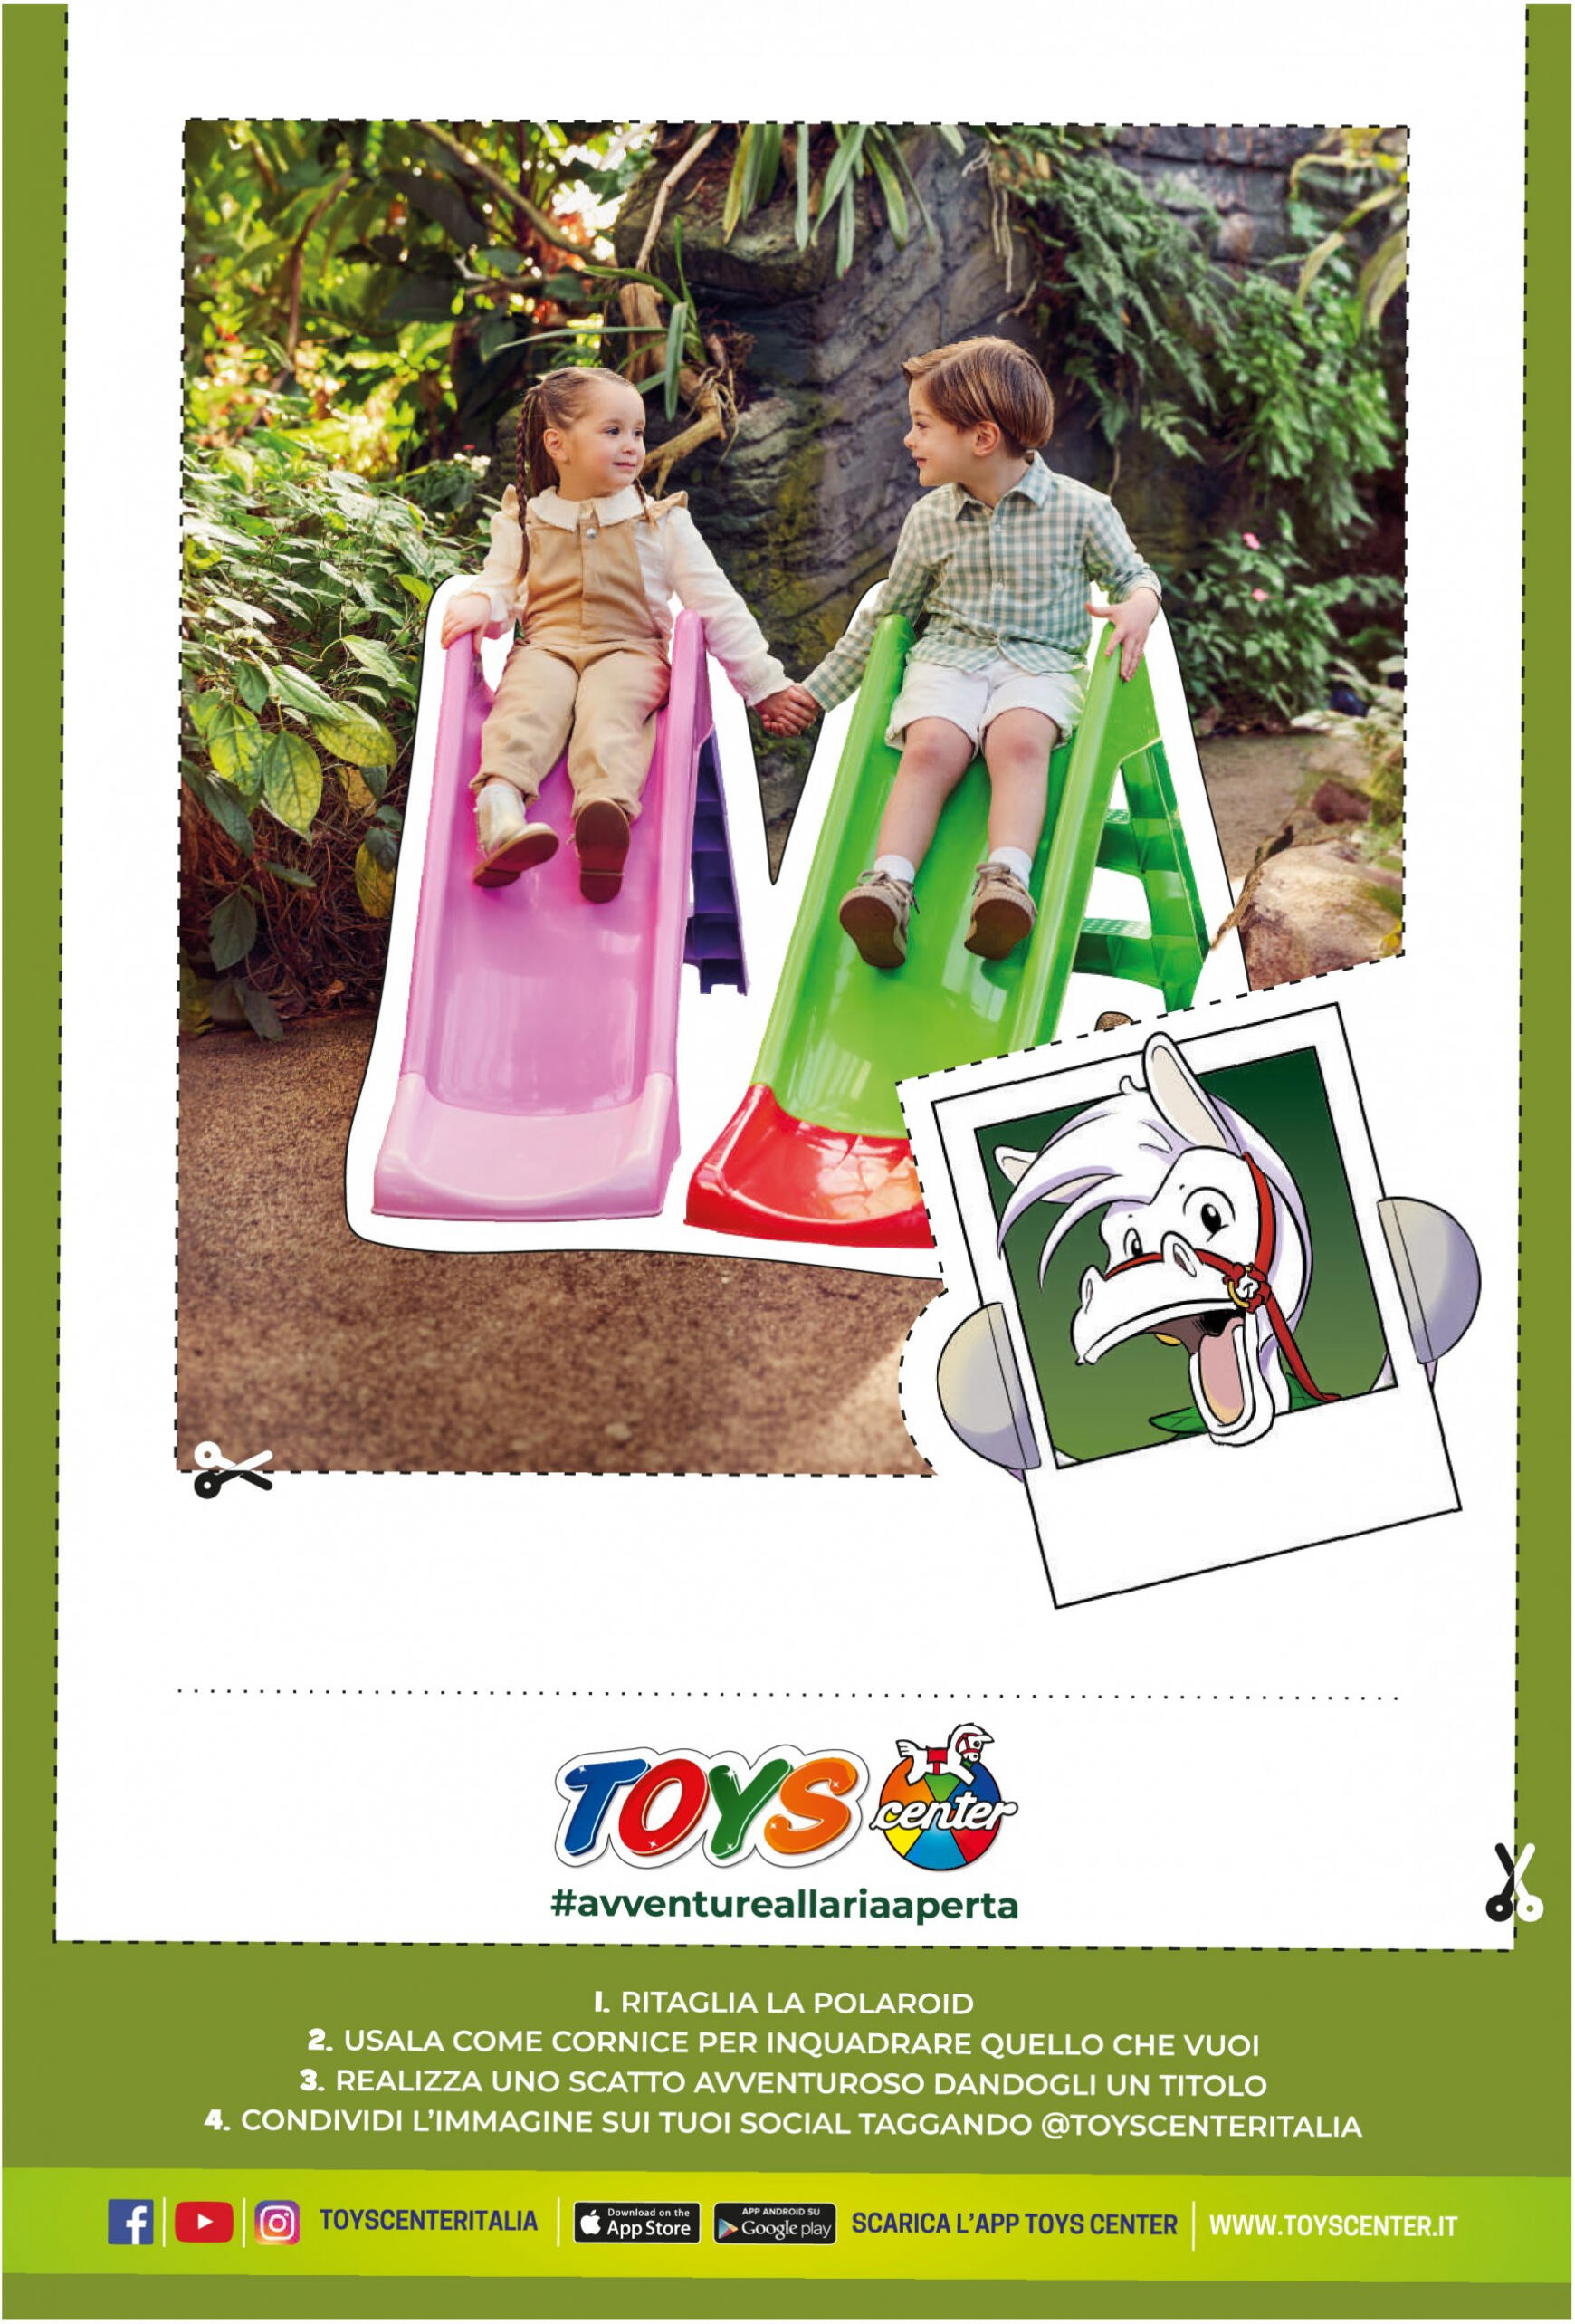 toys-center - Nuovo volantino Toys Center 01.05. - 31.12. - page: 124